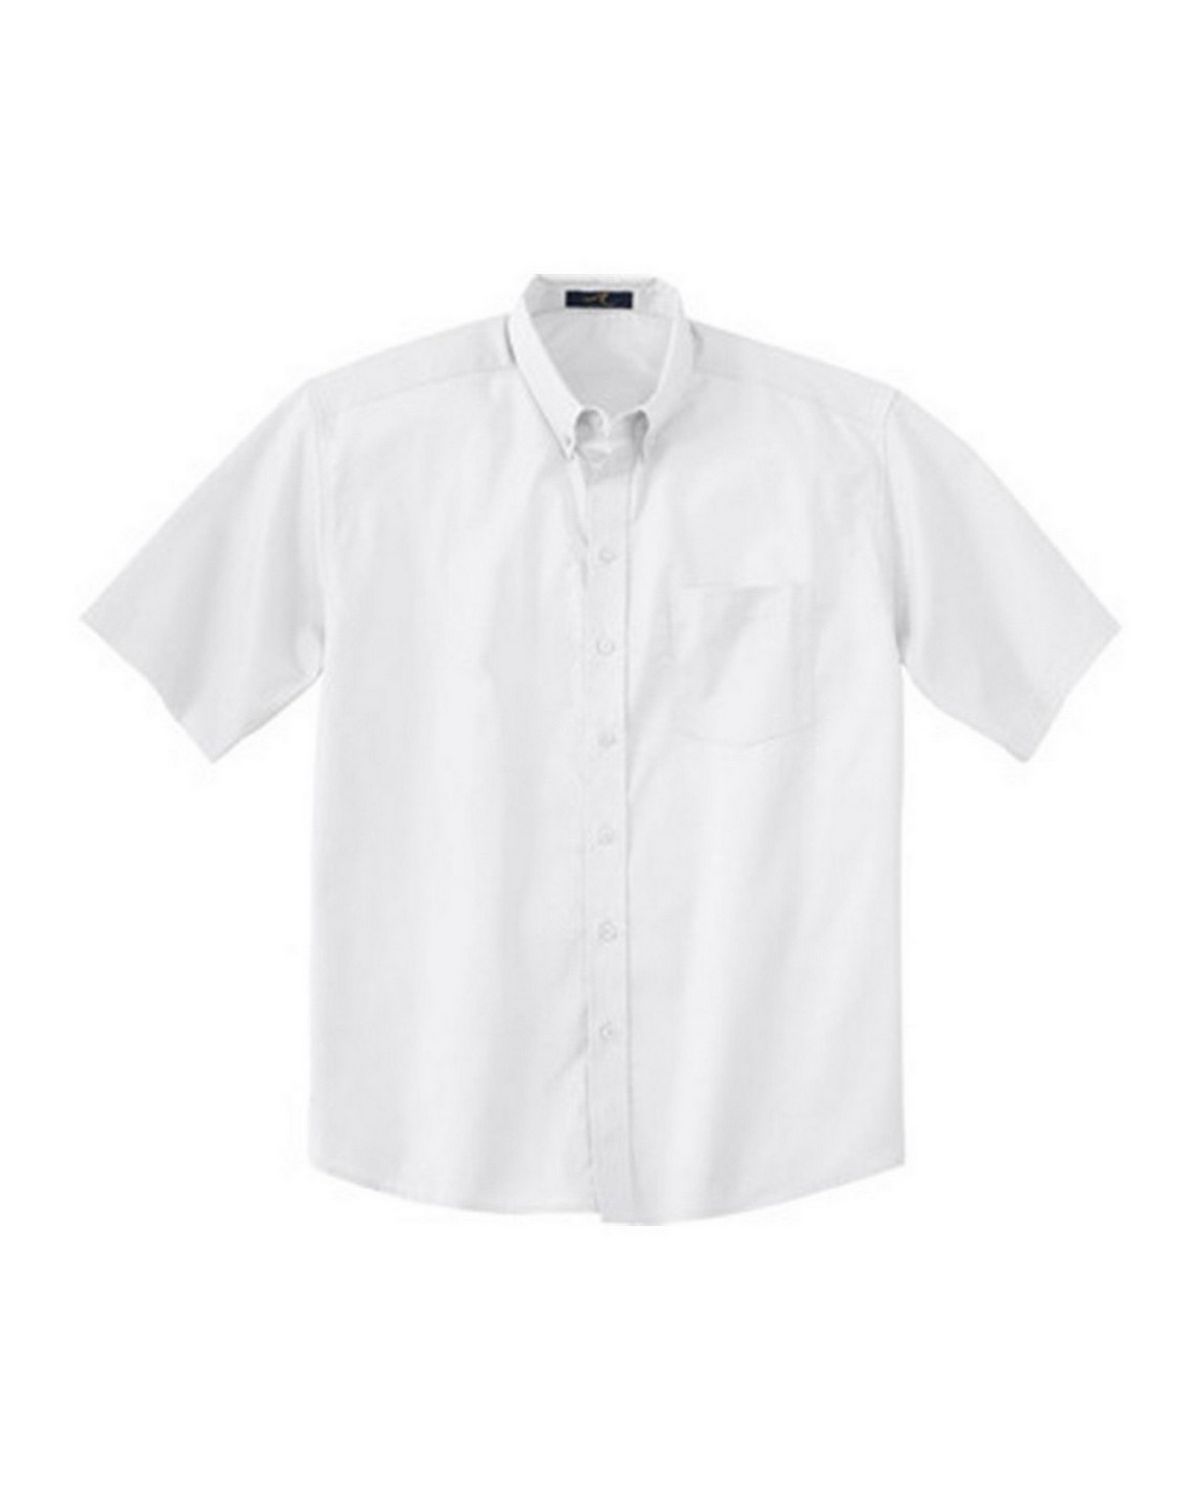 Ash City 87016T Men's Tall Short Sleeve Easy Care Twill Shirt